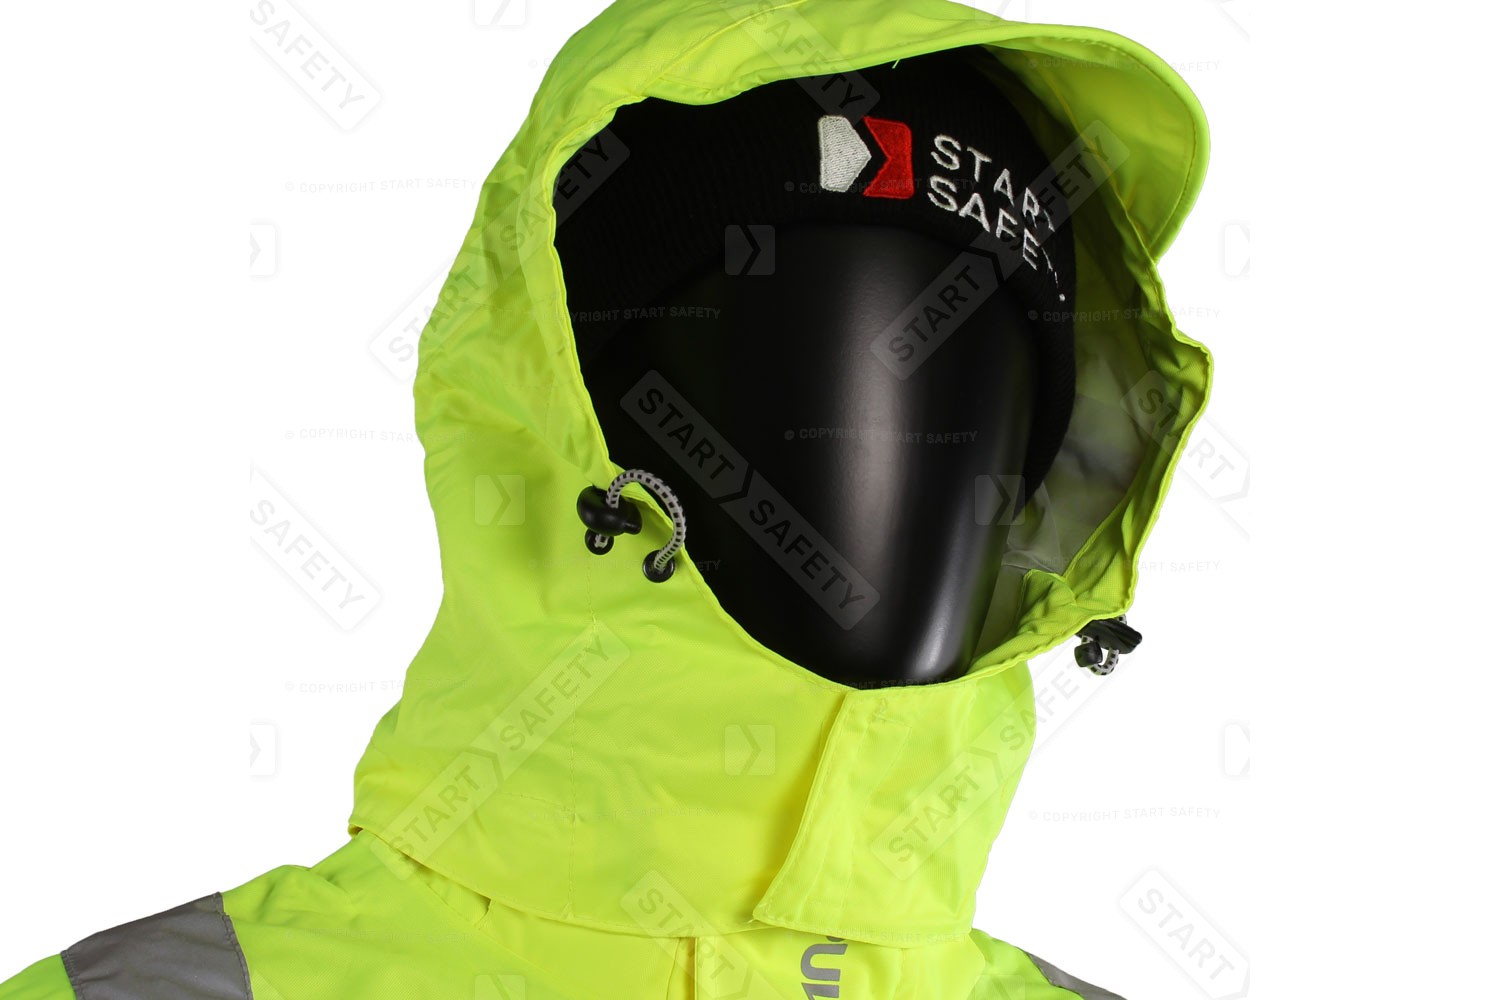 Pulsar Waterproof Hi Vis Jacket Chin Protectors